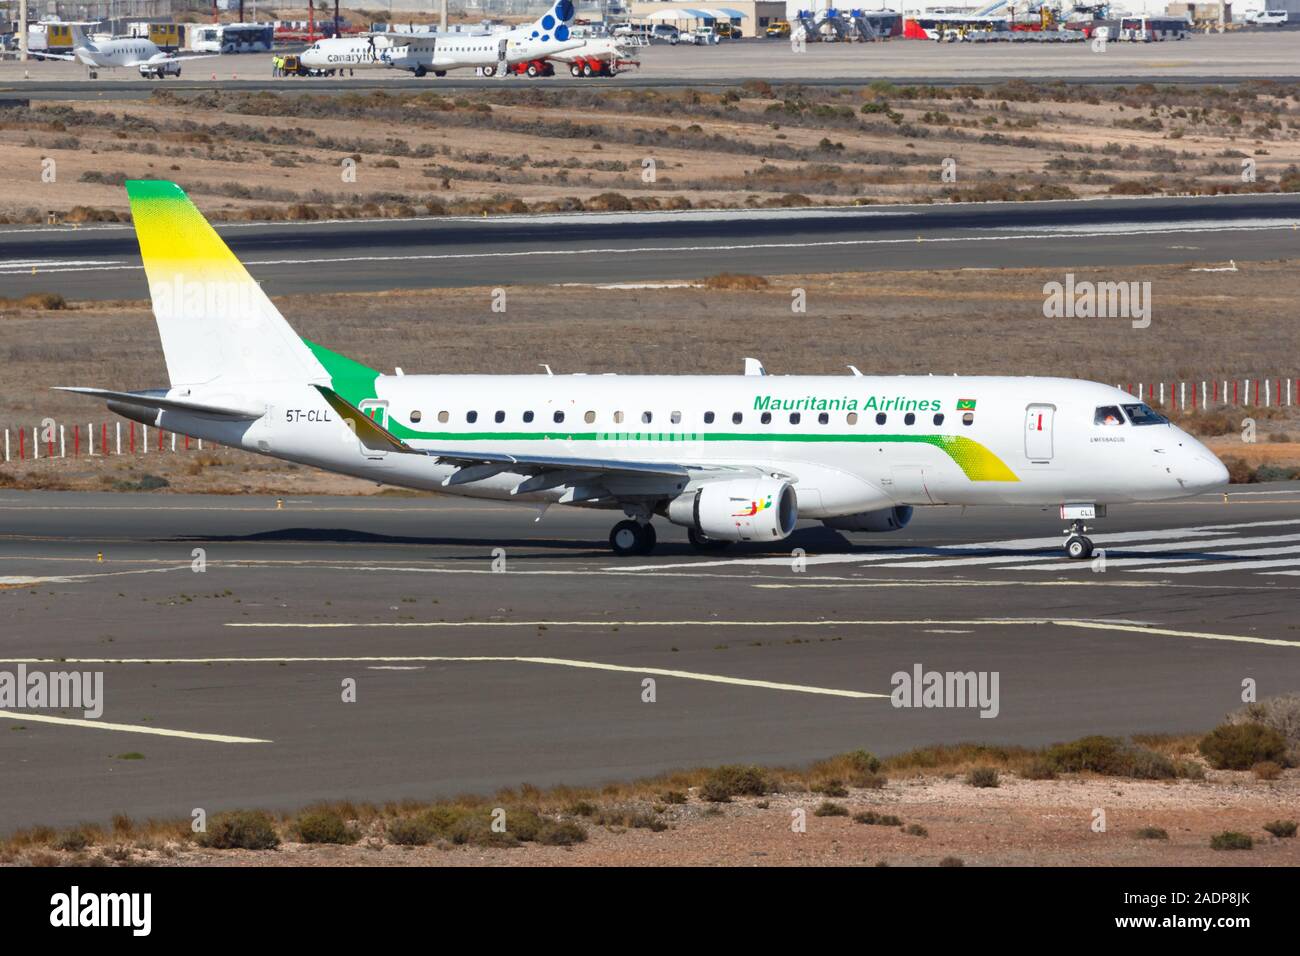 Gran Canaria, Spain – November 24, 2019: Mauritania Airlines Embraer 175 airplane at Gran Canaria airport (LPA) in Spain. Stock Photo